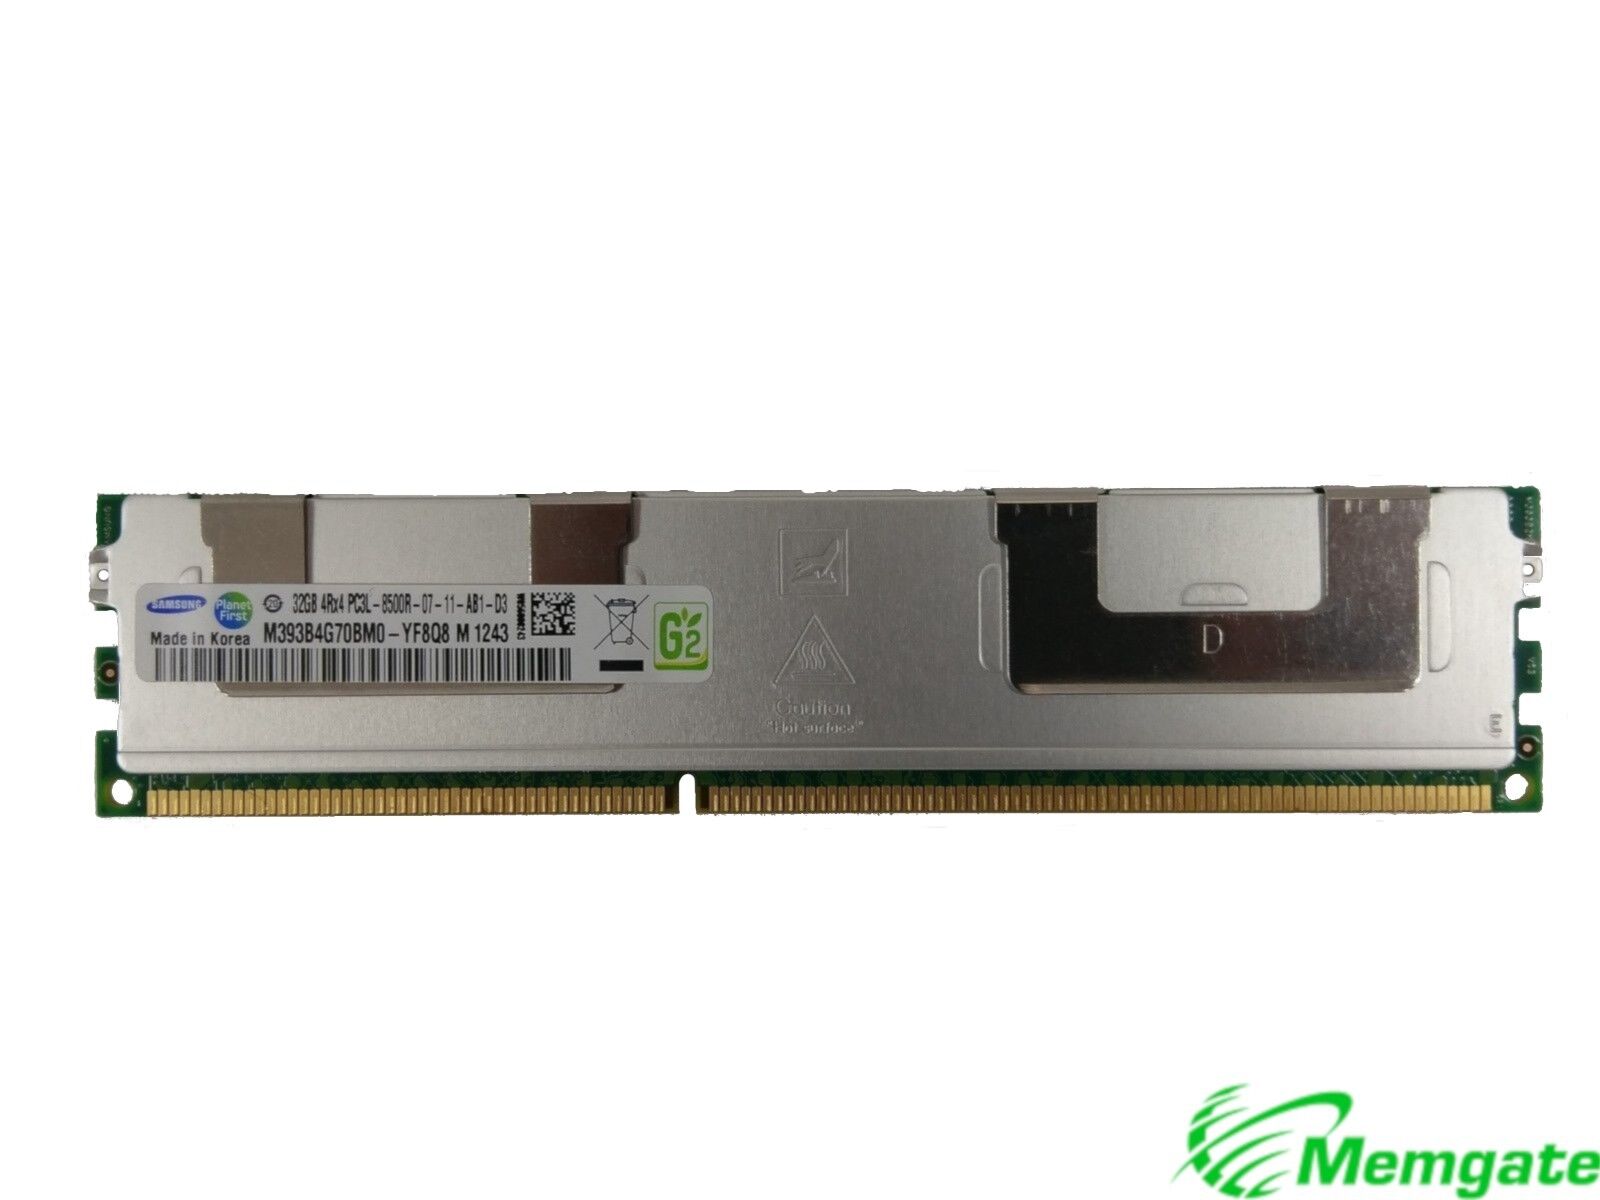 192GB (6 x 32GB) DDR3 RDIMM Memory For Dell PowerEdge T320, R320